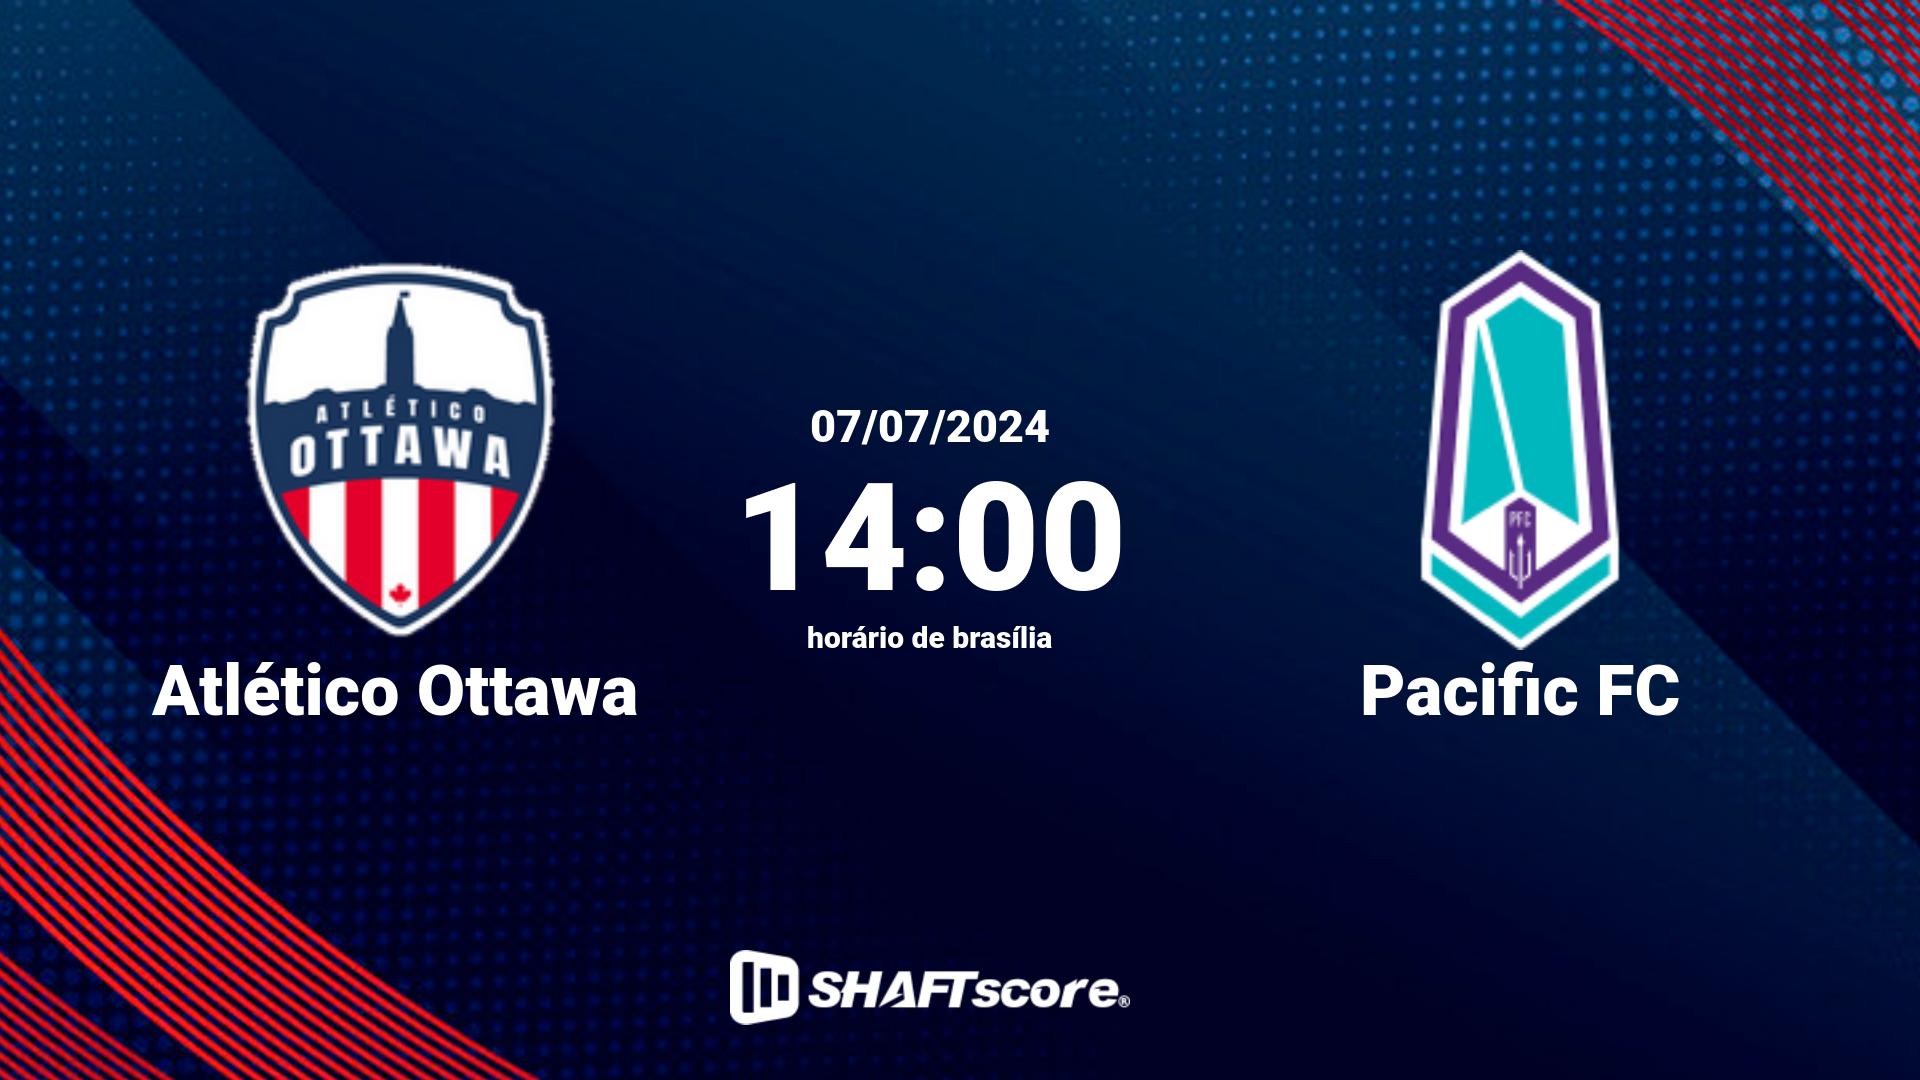 Estatísticas do jogo Atlético Ottawa vs Pacific FC 07.07 14:00